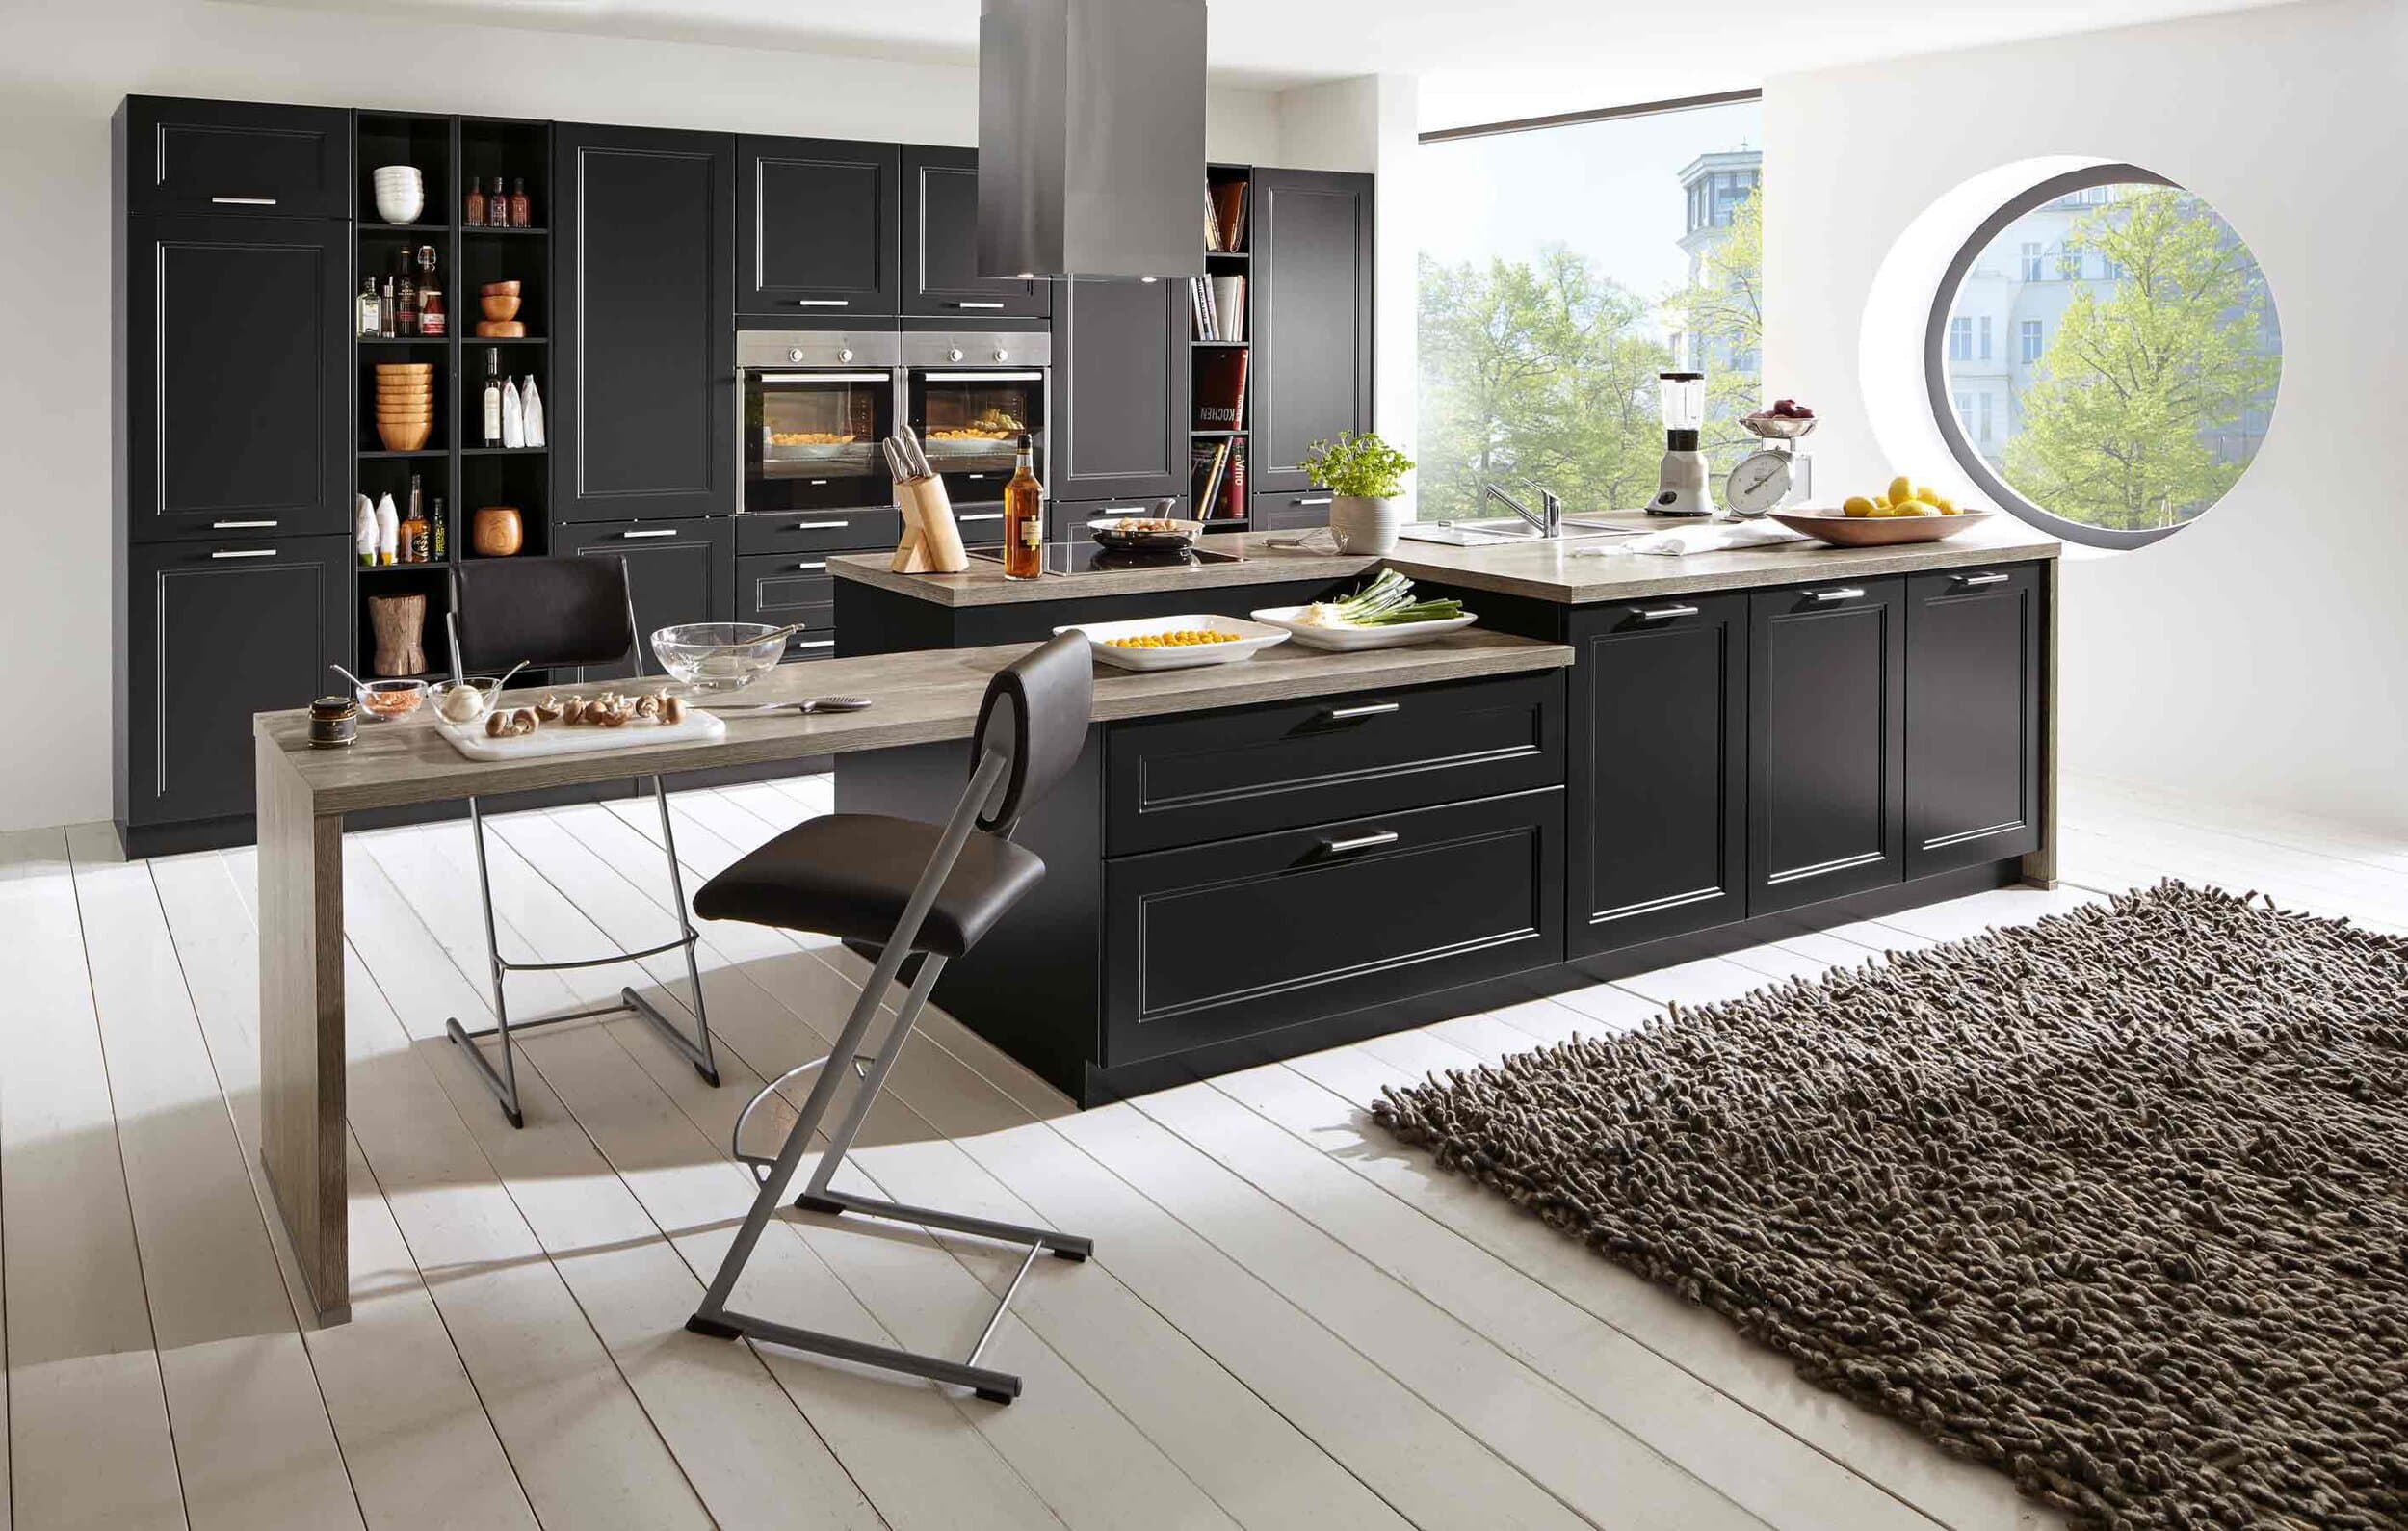 Enjoy modern kitchen style like this remodel.